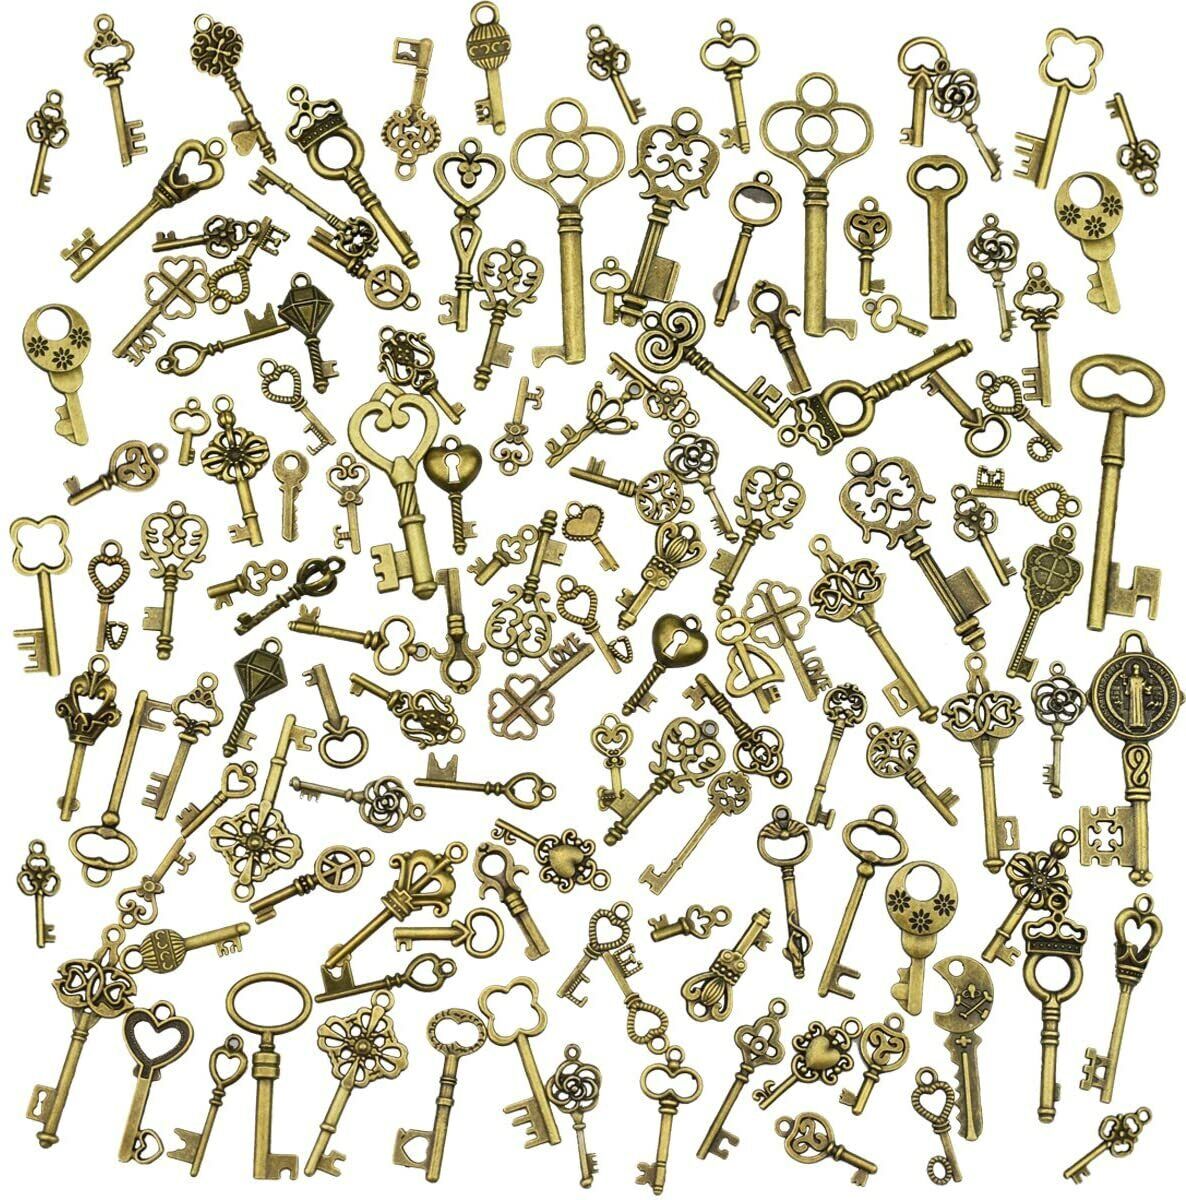 125 PCS/Set Antique Vintage Keys Old Look Bronze Skull KeyS Fancy Charm Pendant